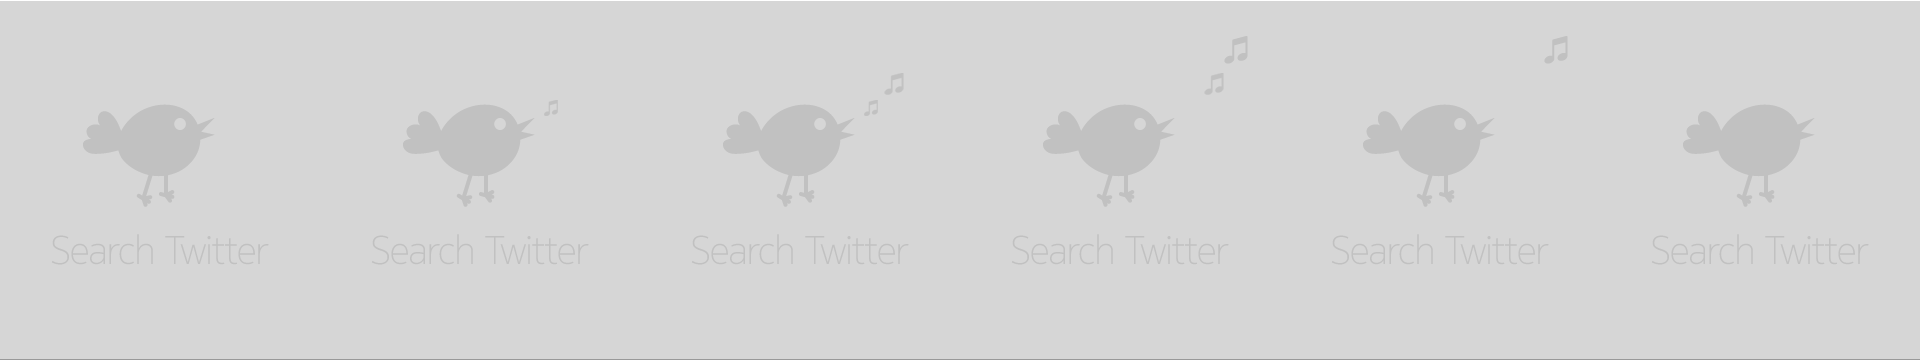 examples/demos/tweetsearch/content/resources/bird-anim-sprites.png